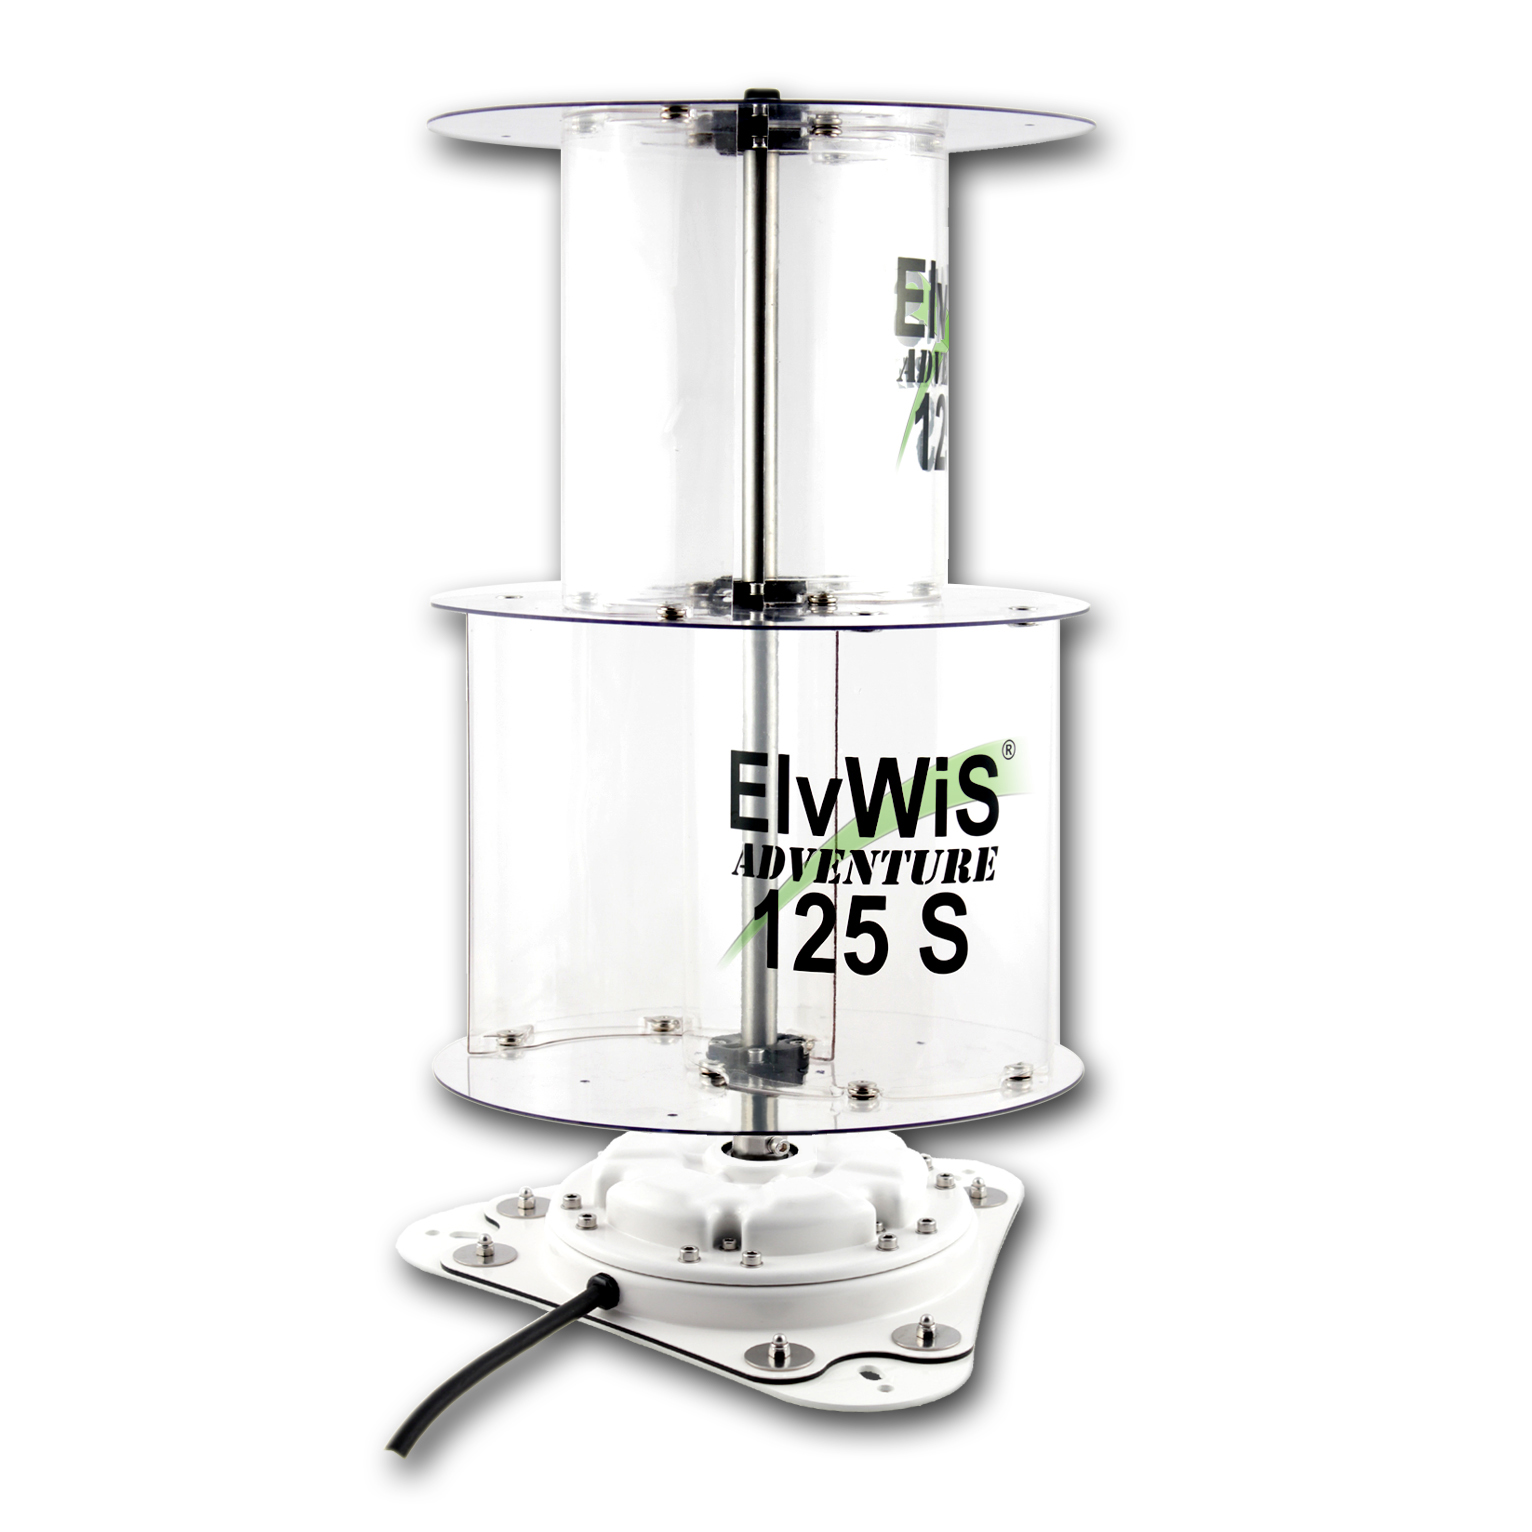 ElvWiS ADVENTURE 125S Stationary Wind Turbine, firmly screwed